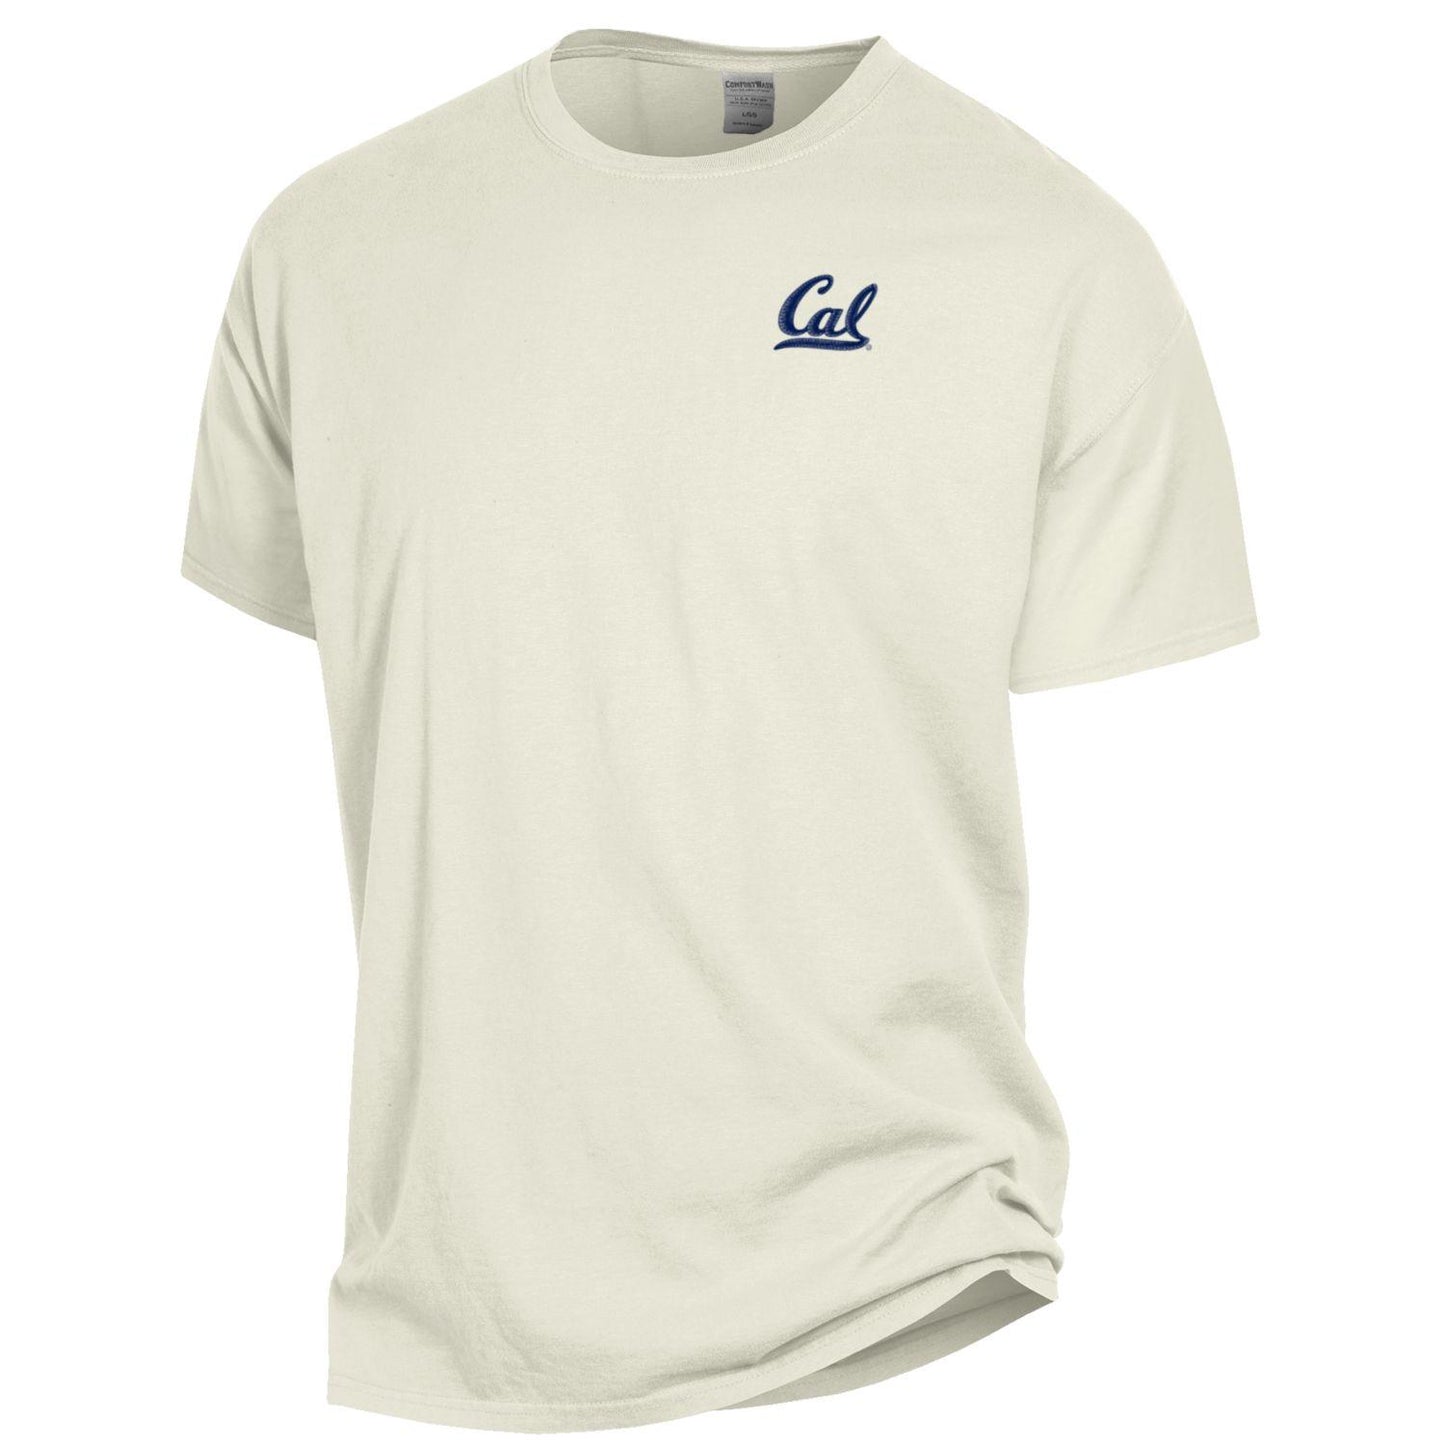 U.C. Berkeley Cal embroidered comfort wash T-Shirt-Ivory-Shop College Wear